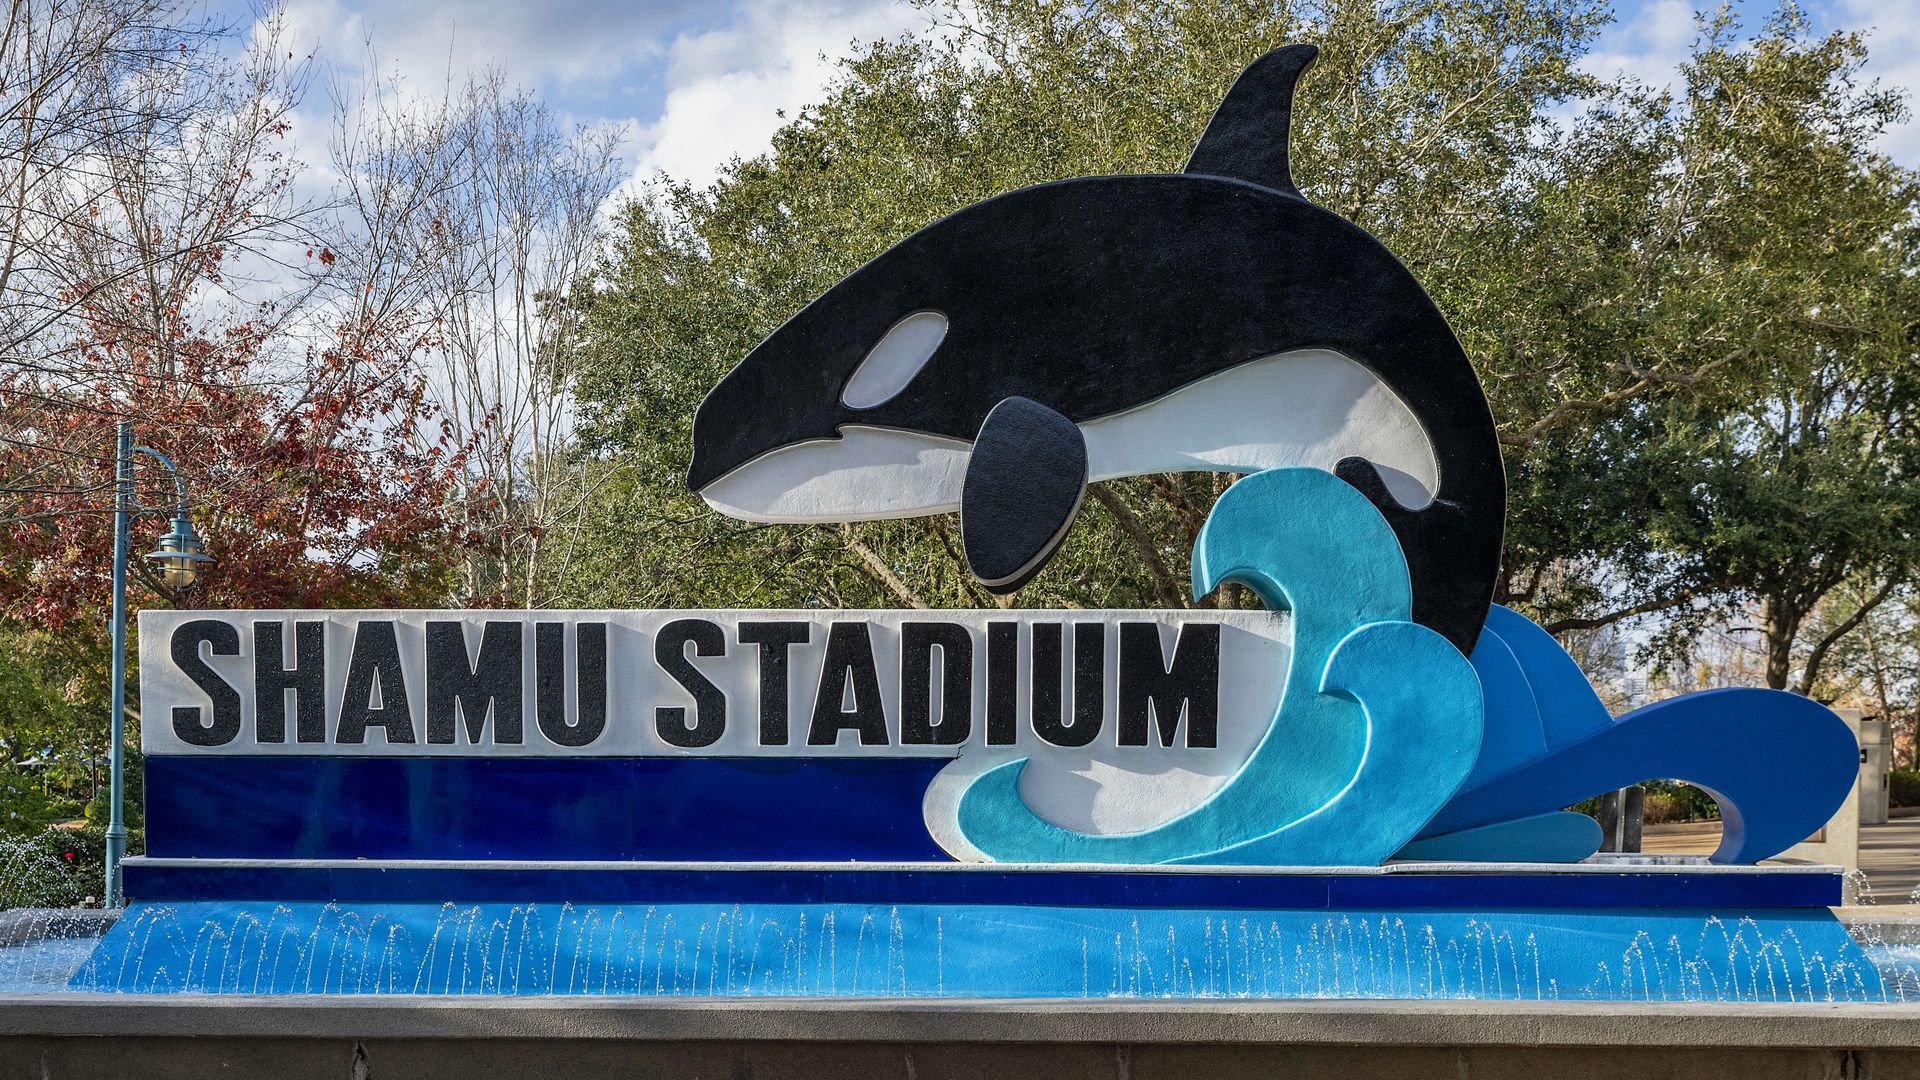 Shamu Stadium at Seaworld marine park, Orlando Florida. (Photo by John Greim/LightRocket via Getty Images)